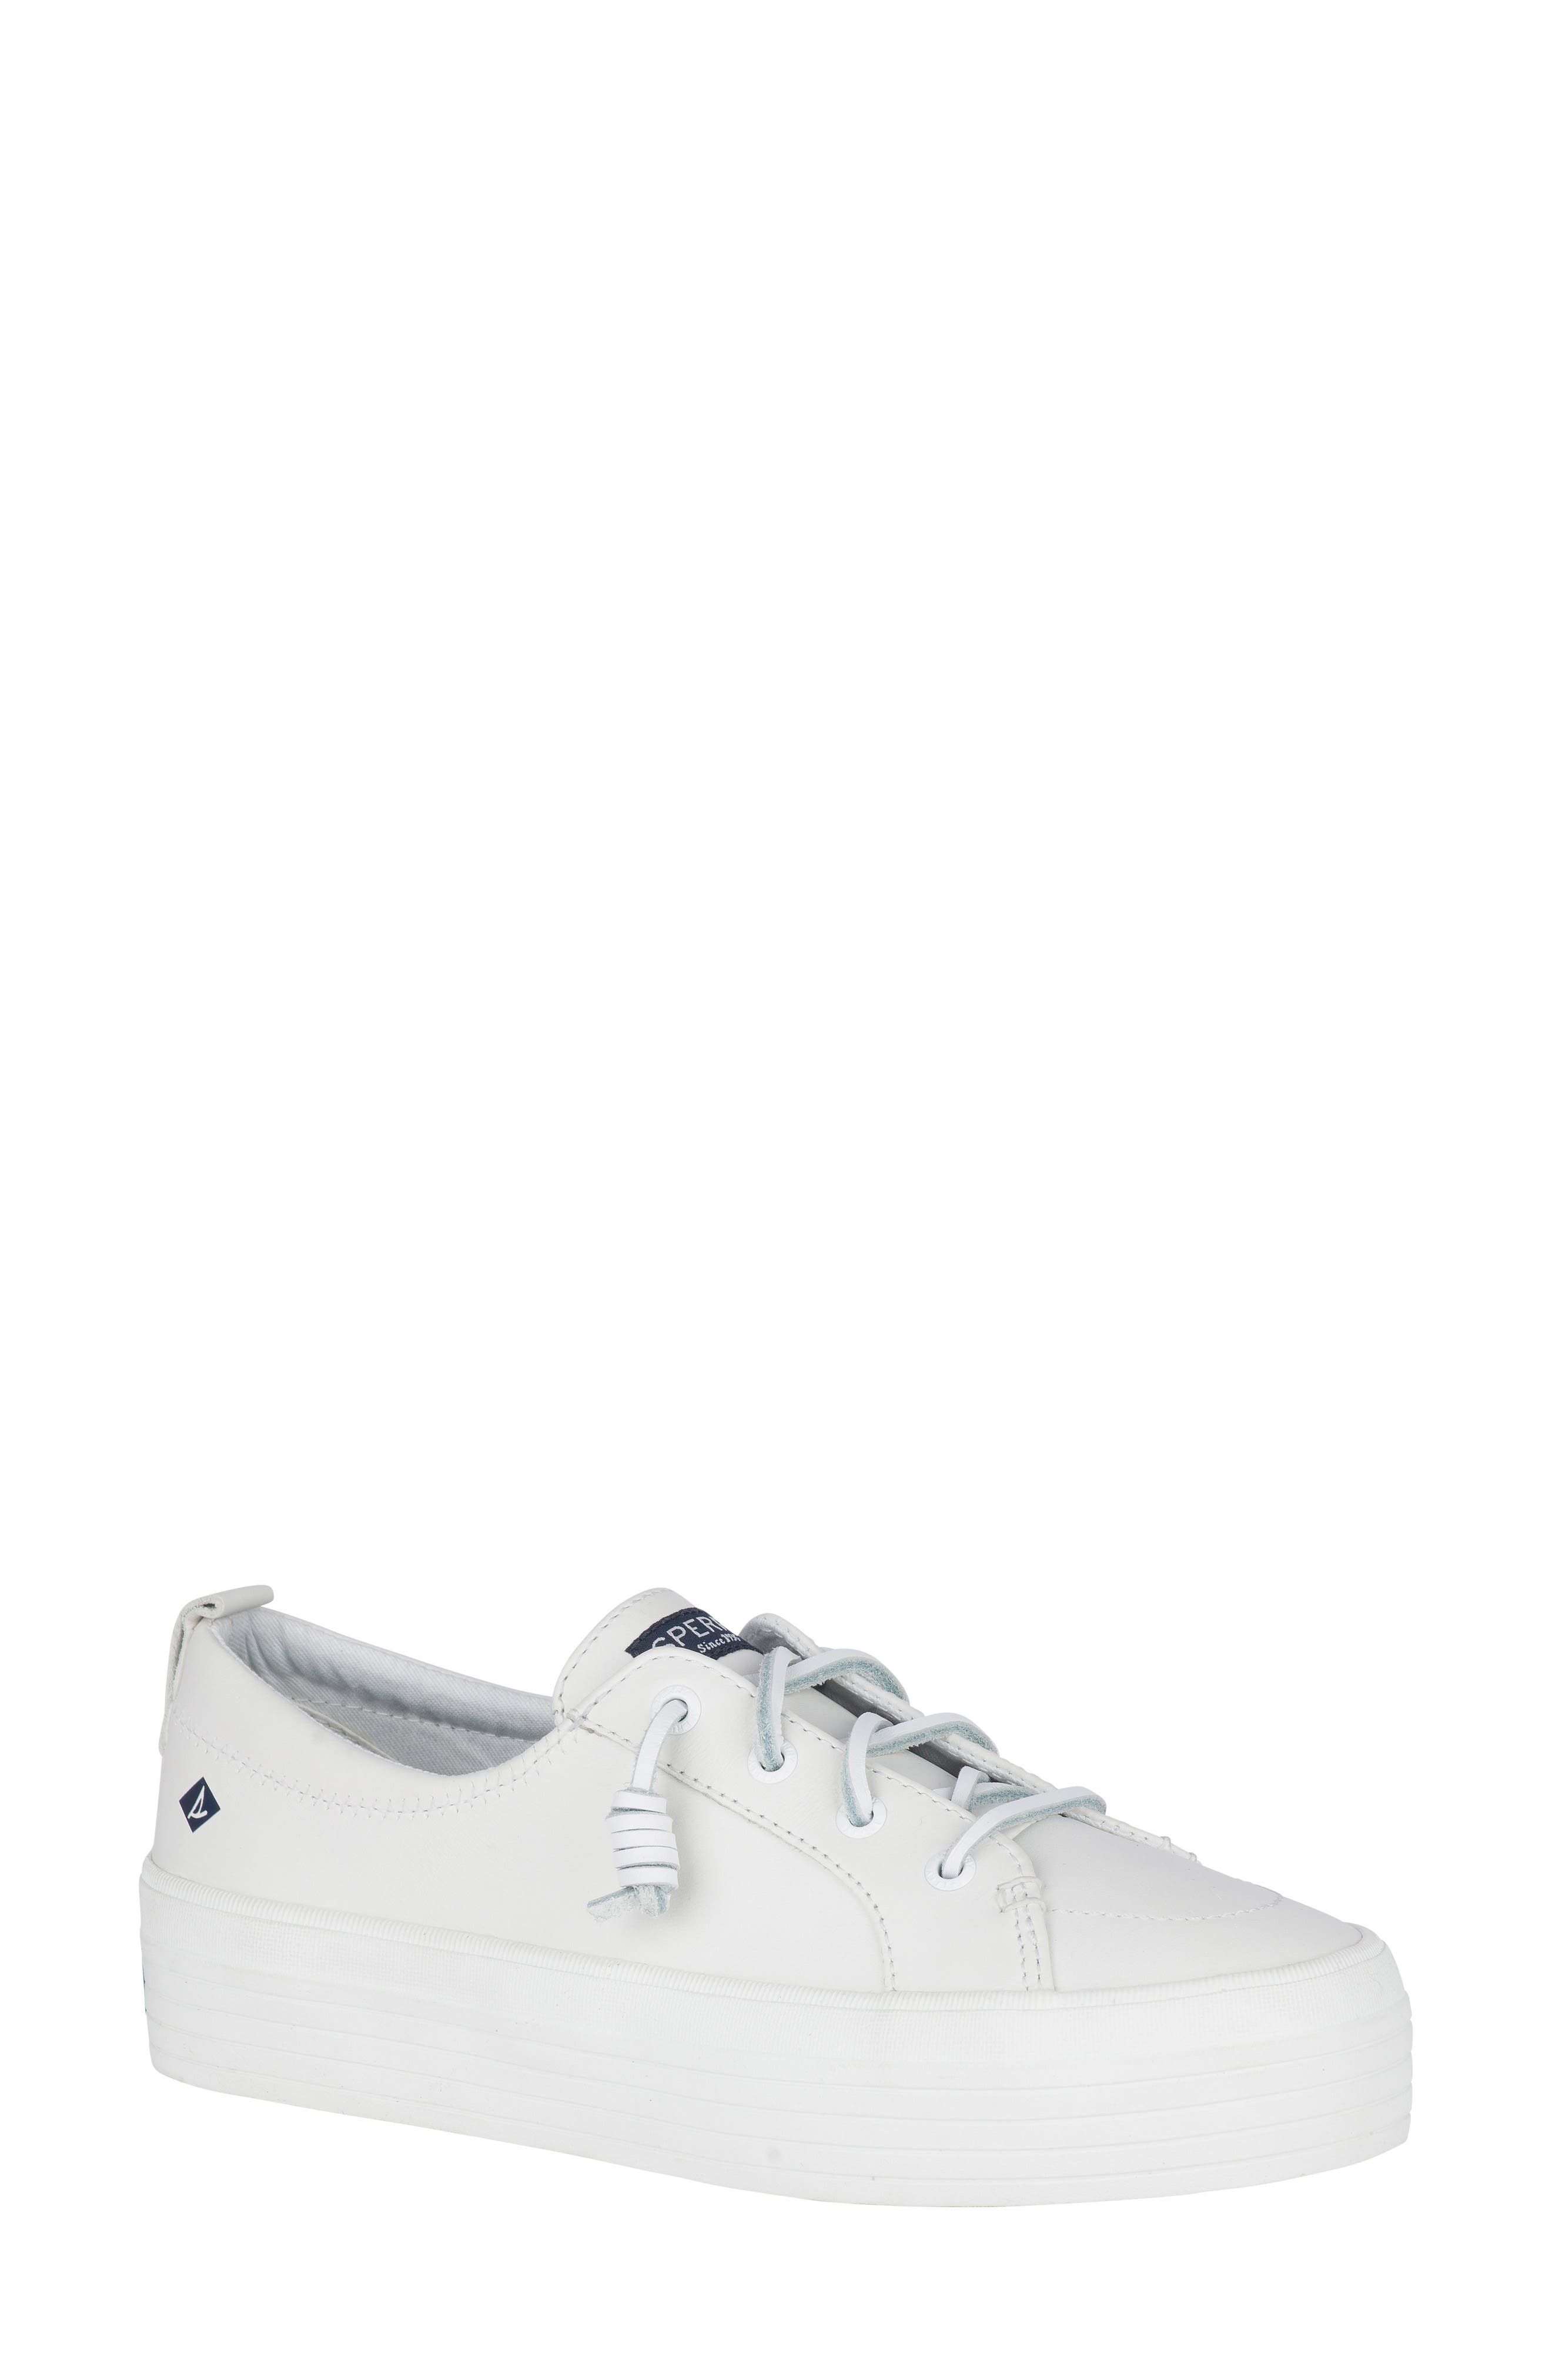 sperry white slip on sneakers